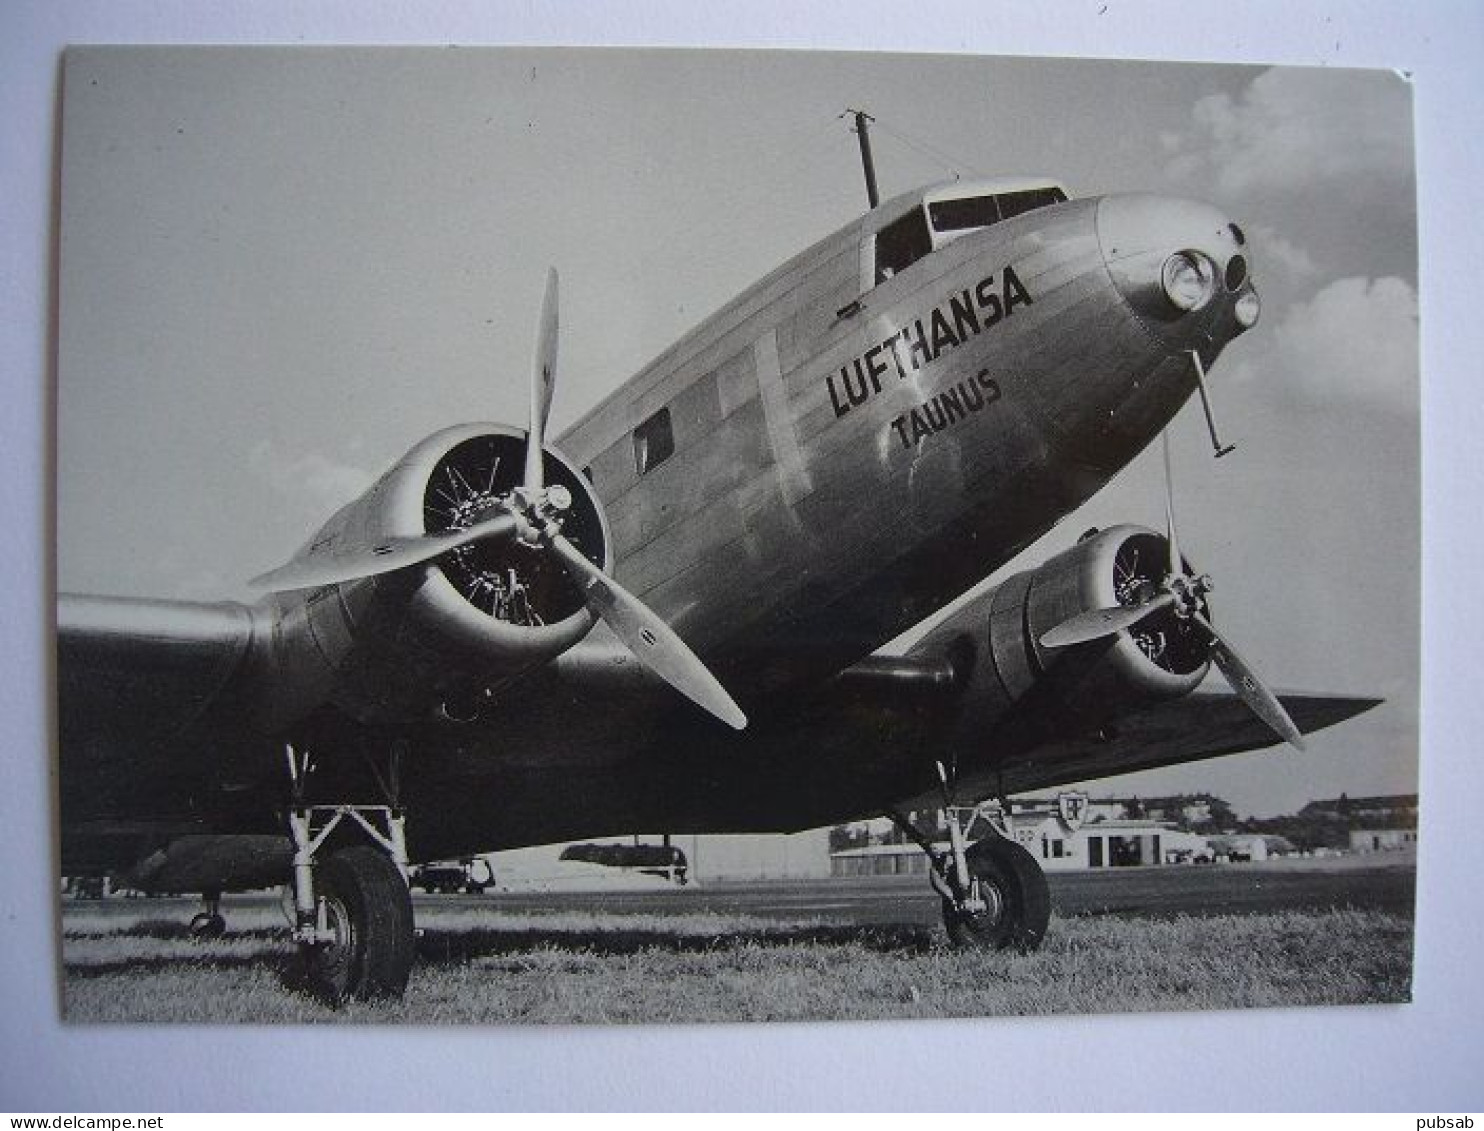 Avion / Airplane / LUFTHANSA / Douglas DC-2 / Registered As D-ABEQ - 1946-....: Ere Moderne